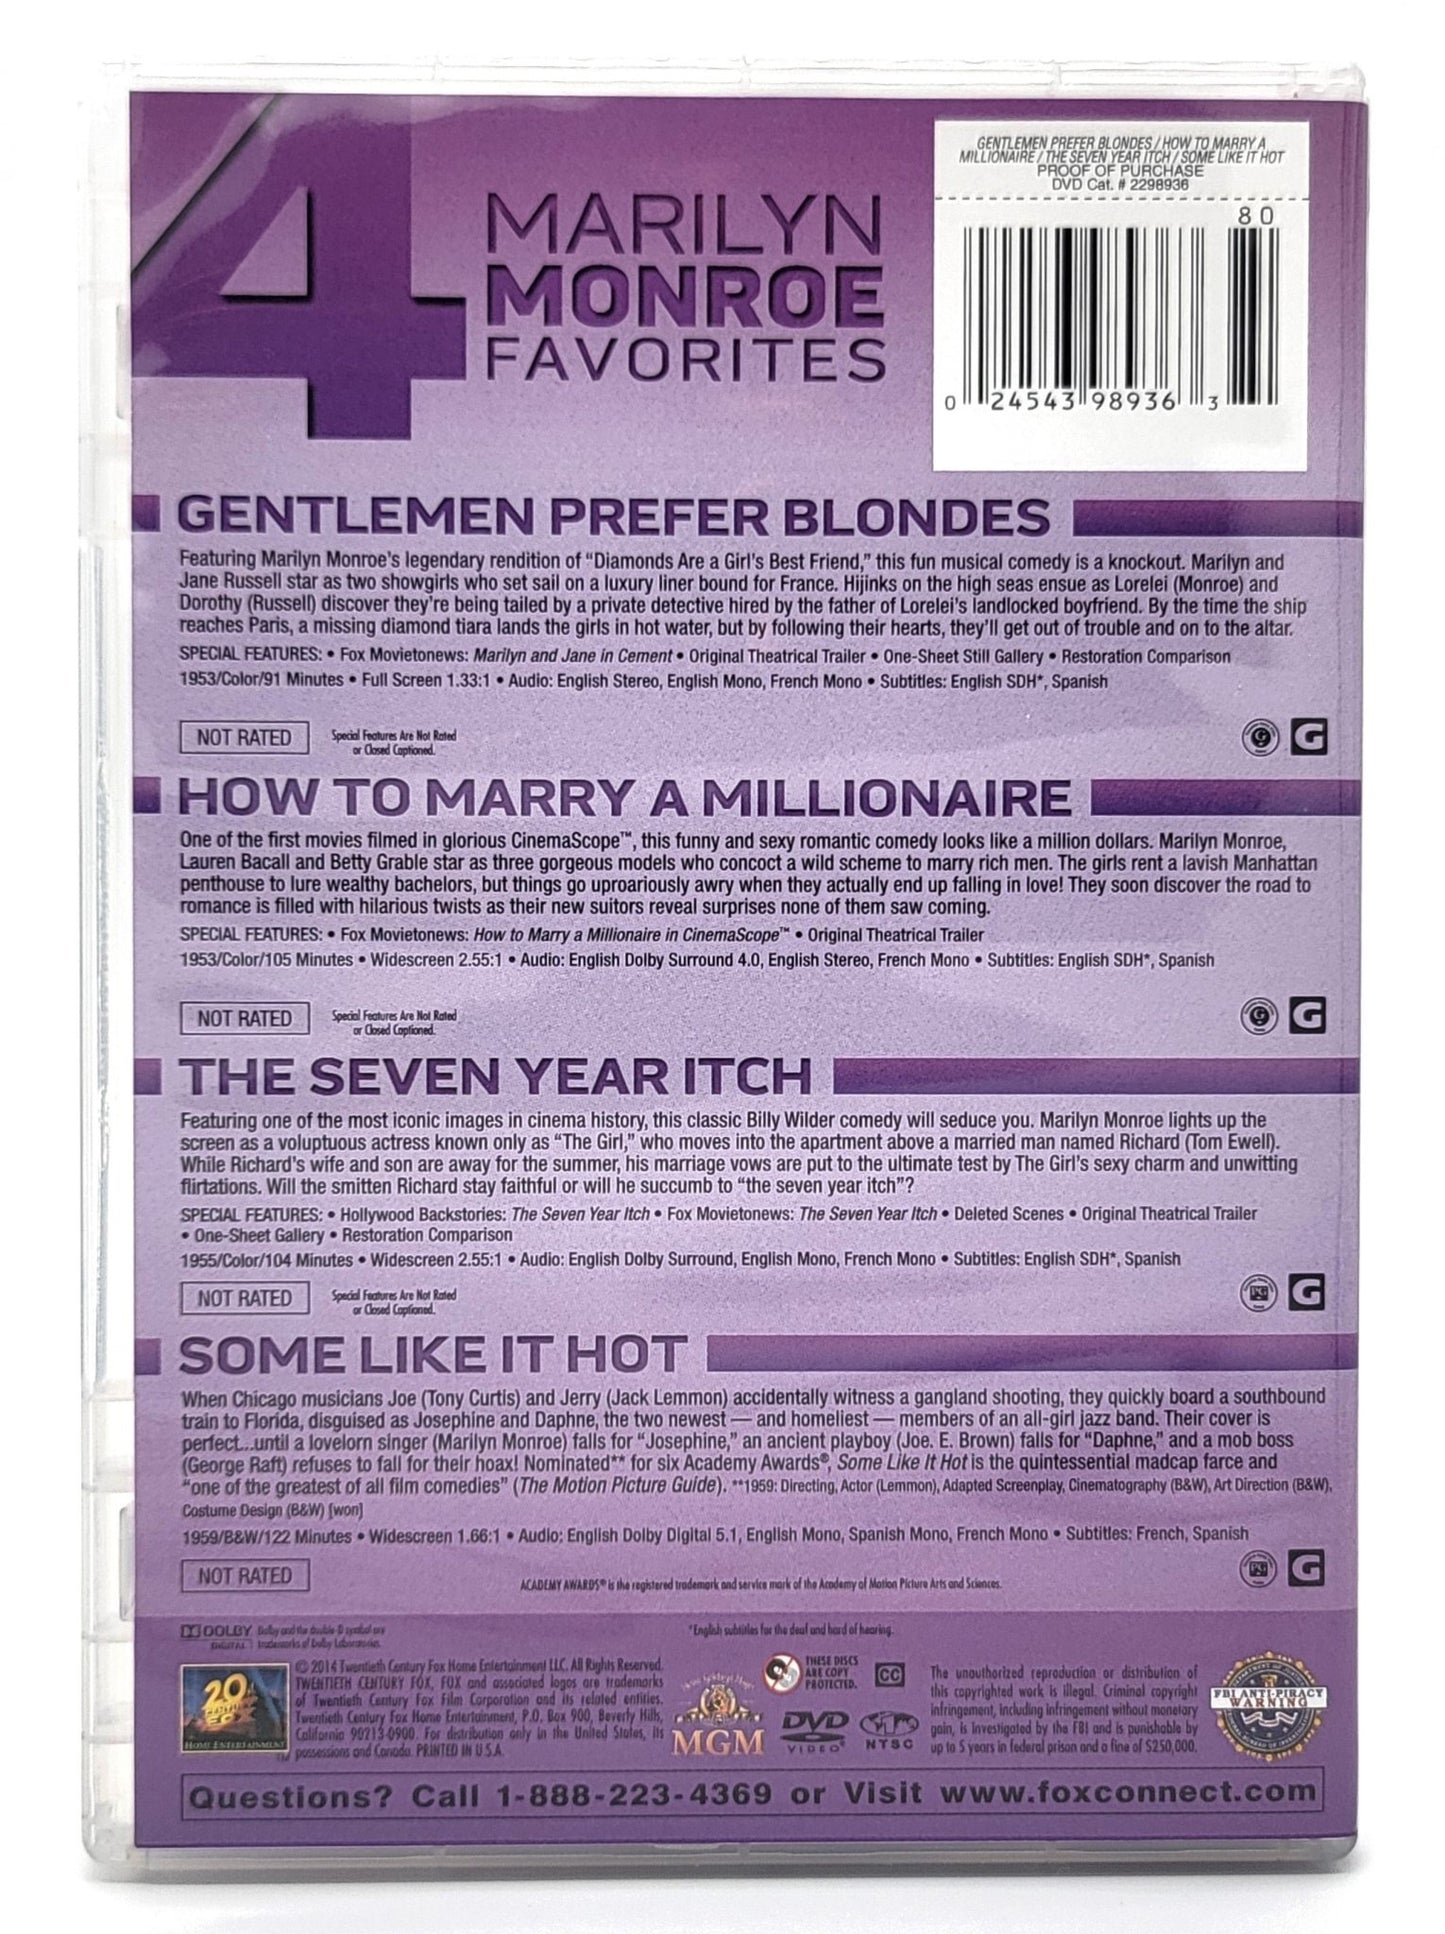 20th Century Fox Home Entertainment - 4 Marilyn Monroe Favorites | DVD | Widescreen - 4 Disc - DVD - Steady Bunny Shop